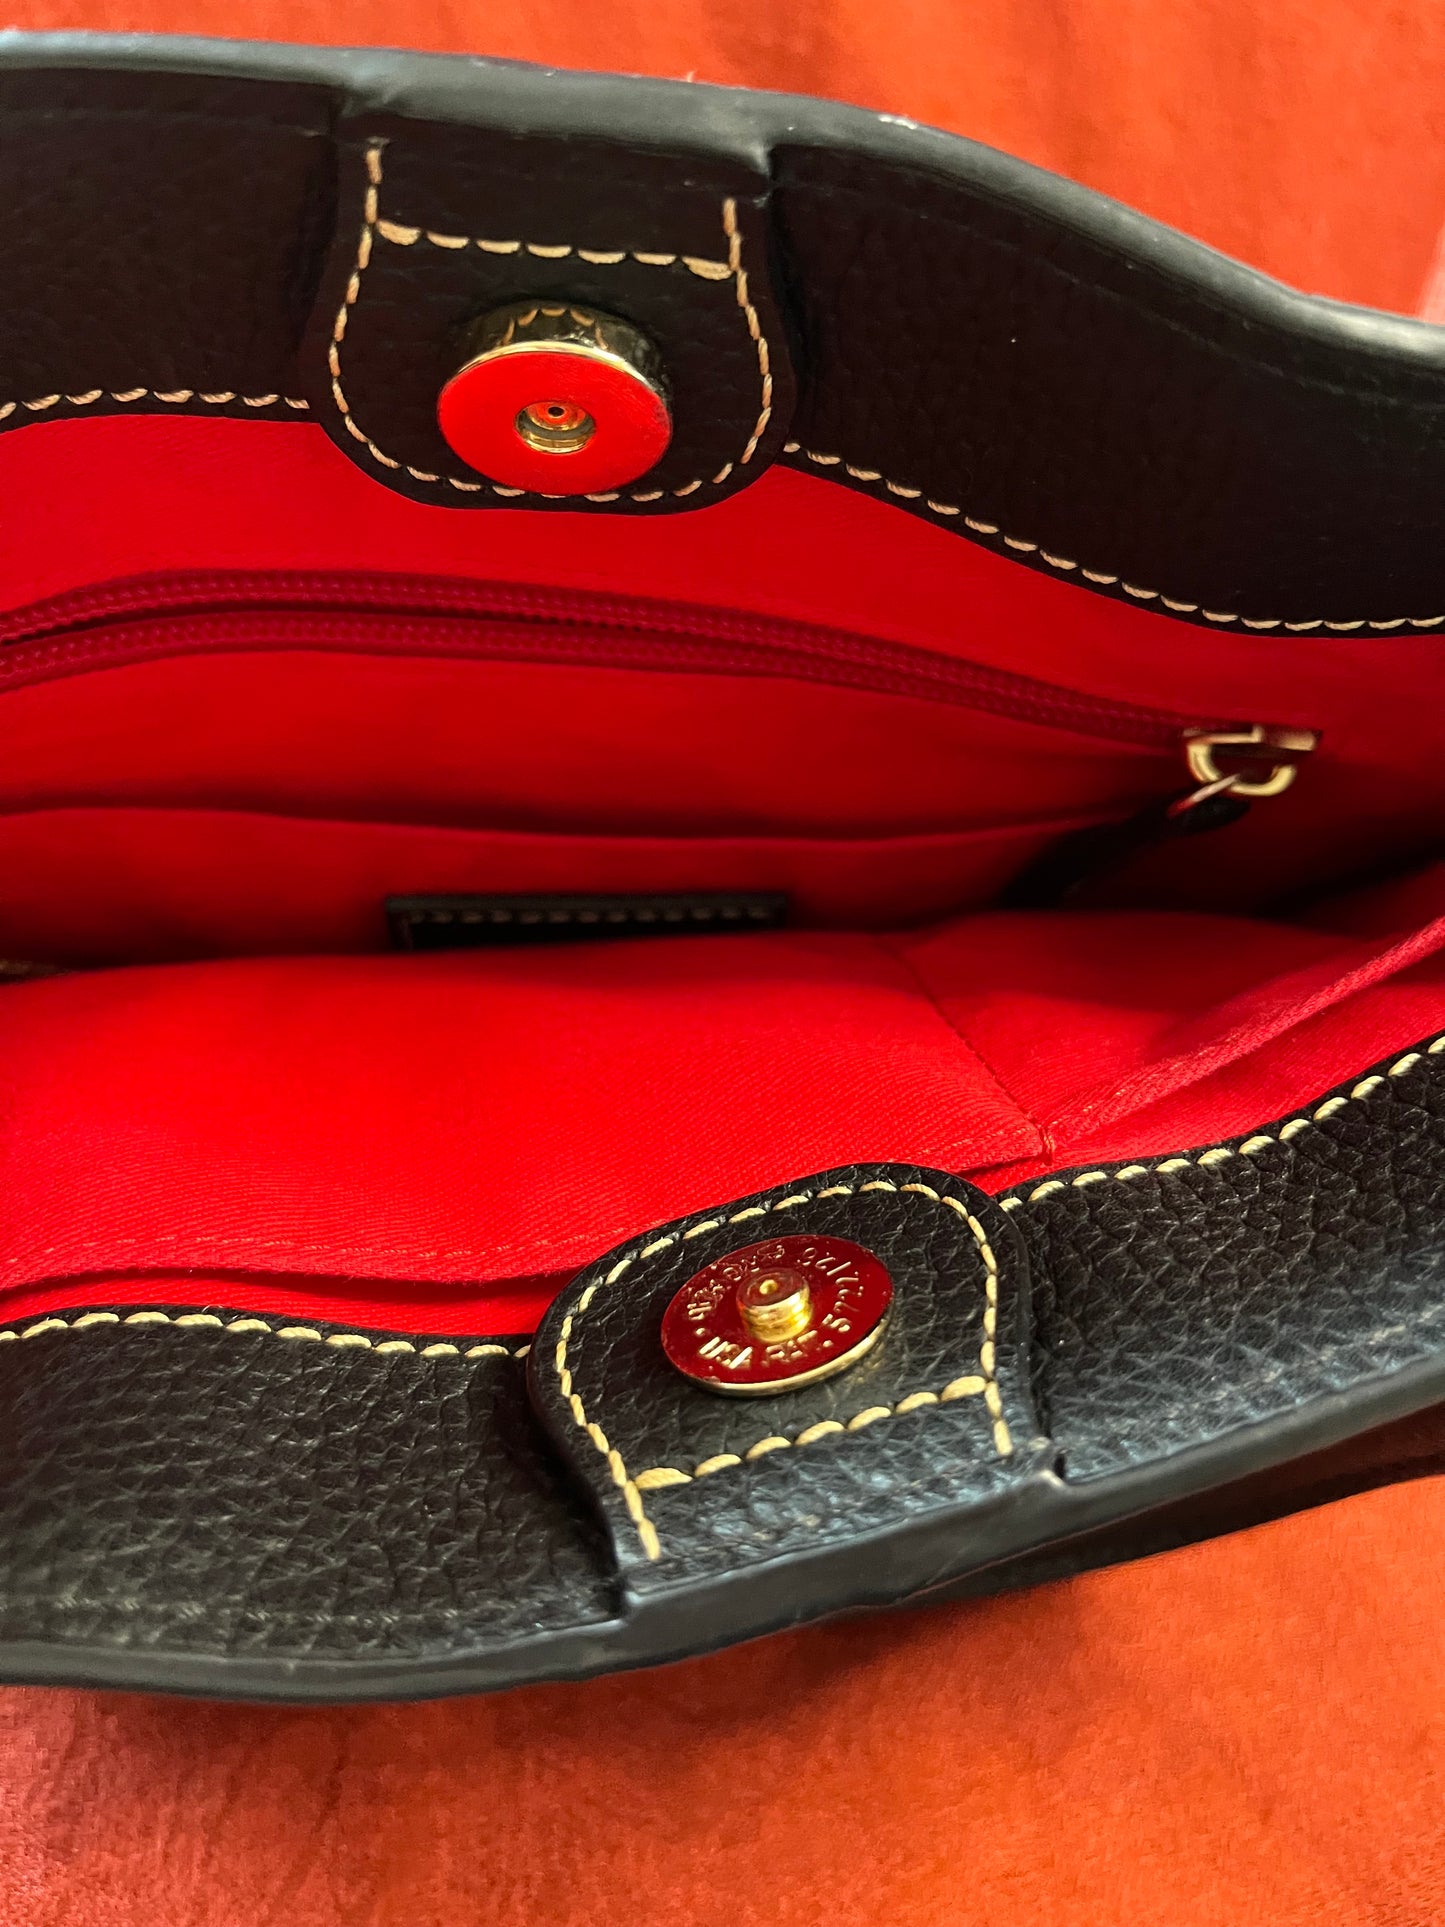 Dooney & Bourke Saffiano Leather Small Crossbody Bag